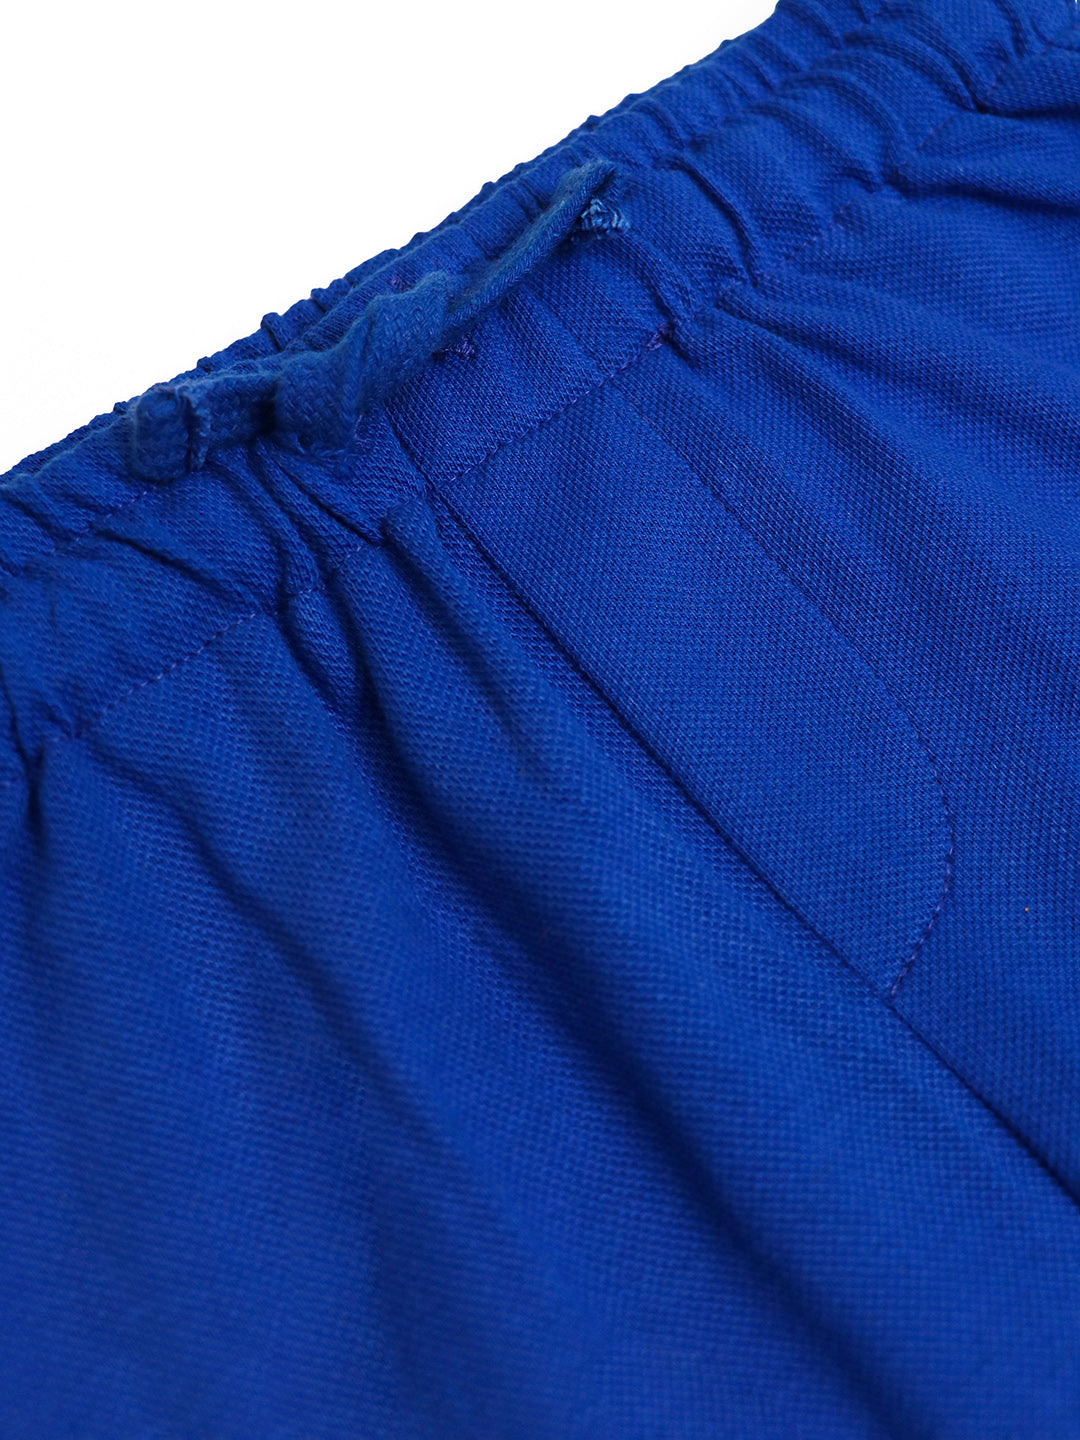 Boys Royal Blue Hustle Cotton Shorts